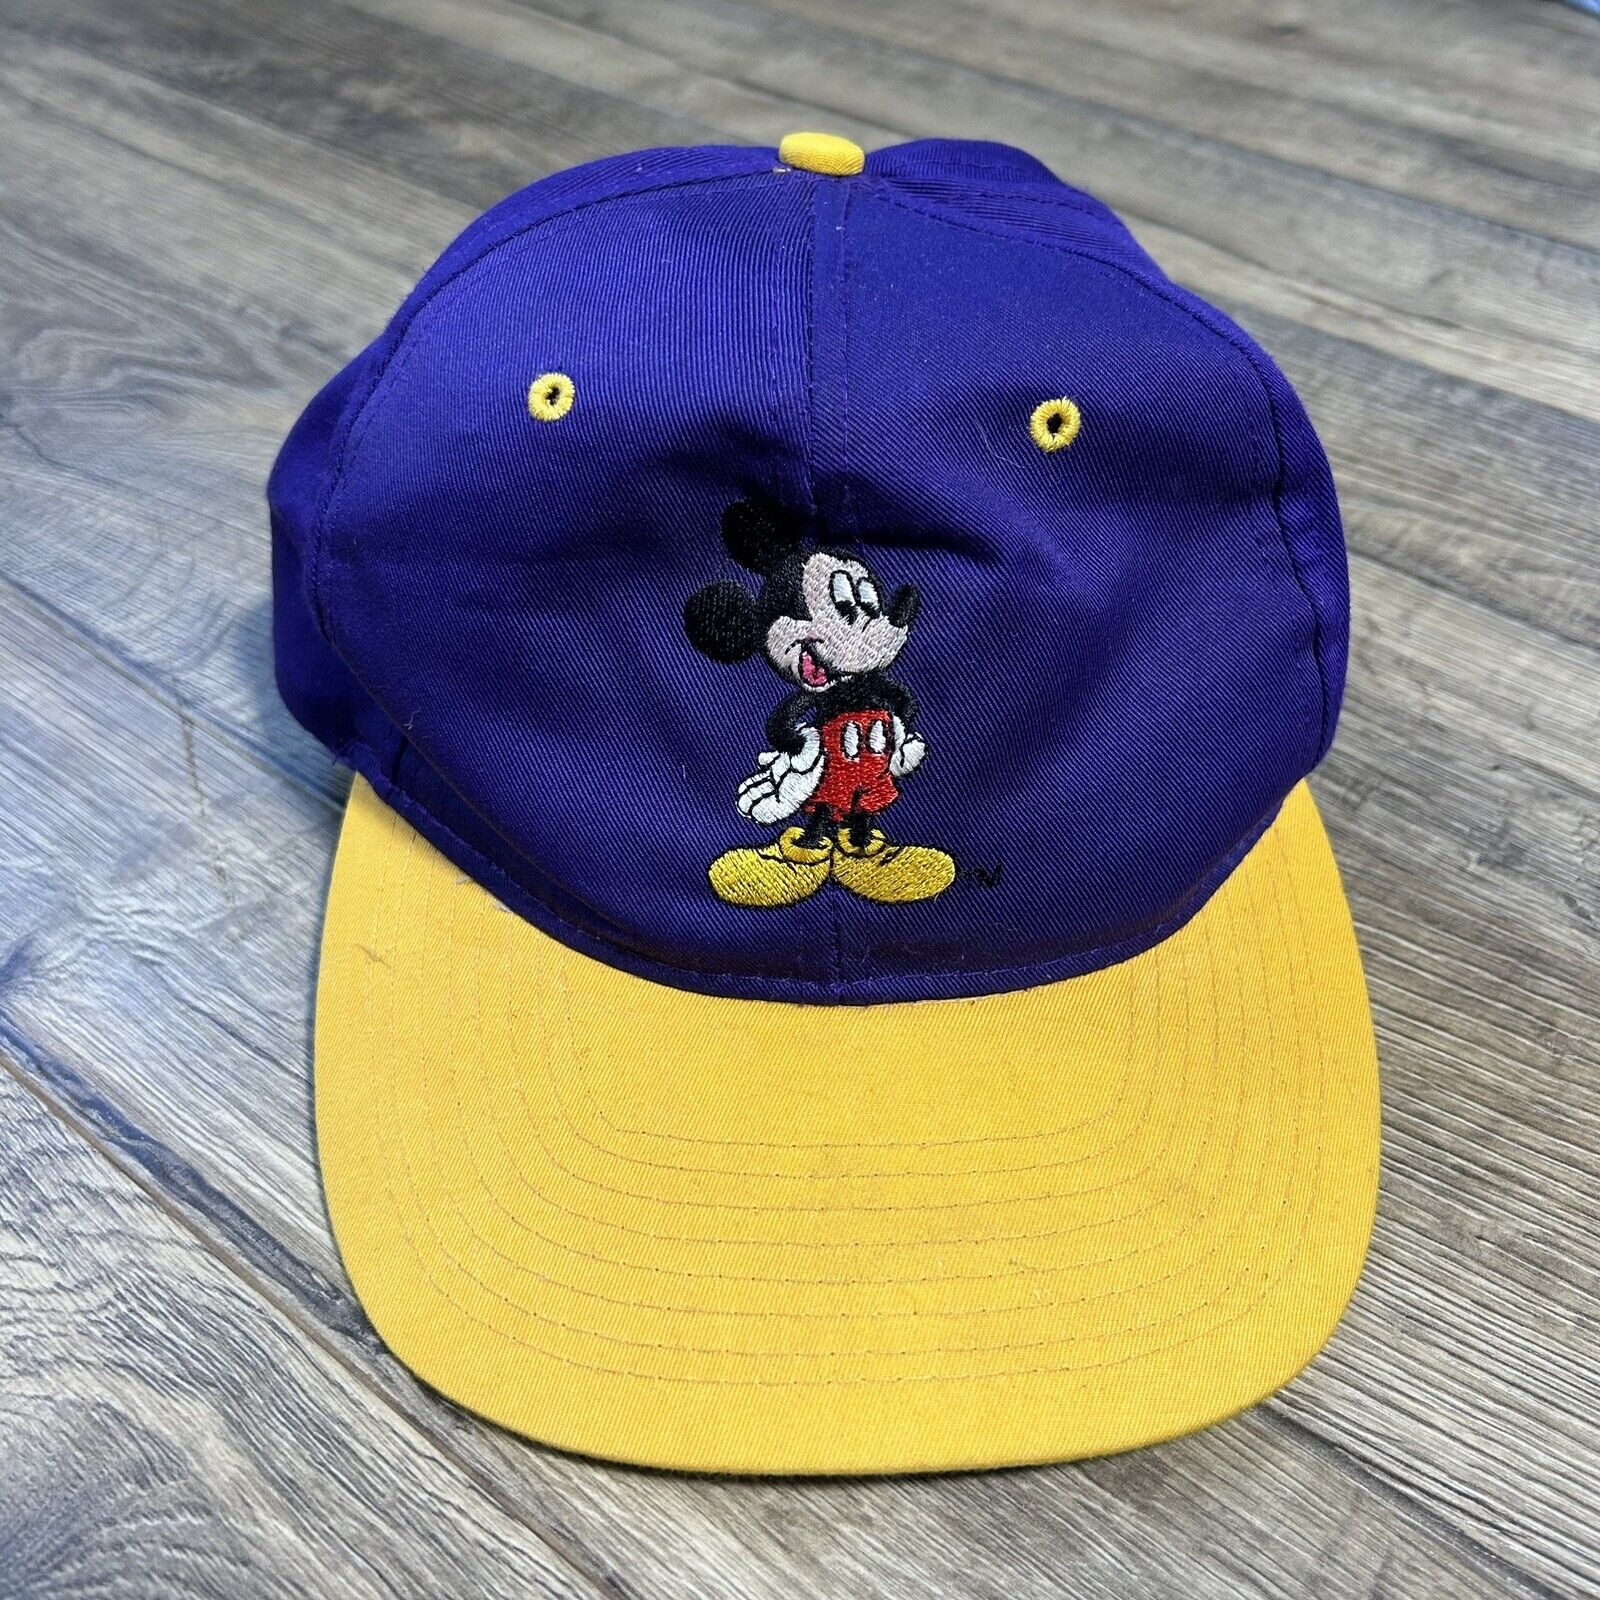 Vintage 90s Walt Disney World Mickey Mouse Hat Purple/Yellow Adjustable Cap OSFM